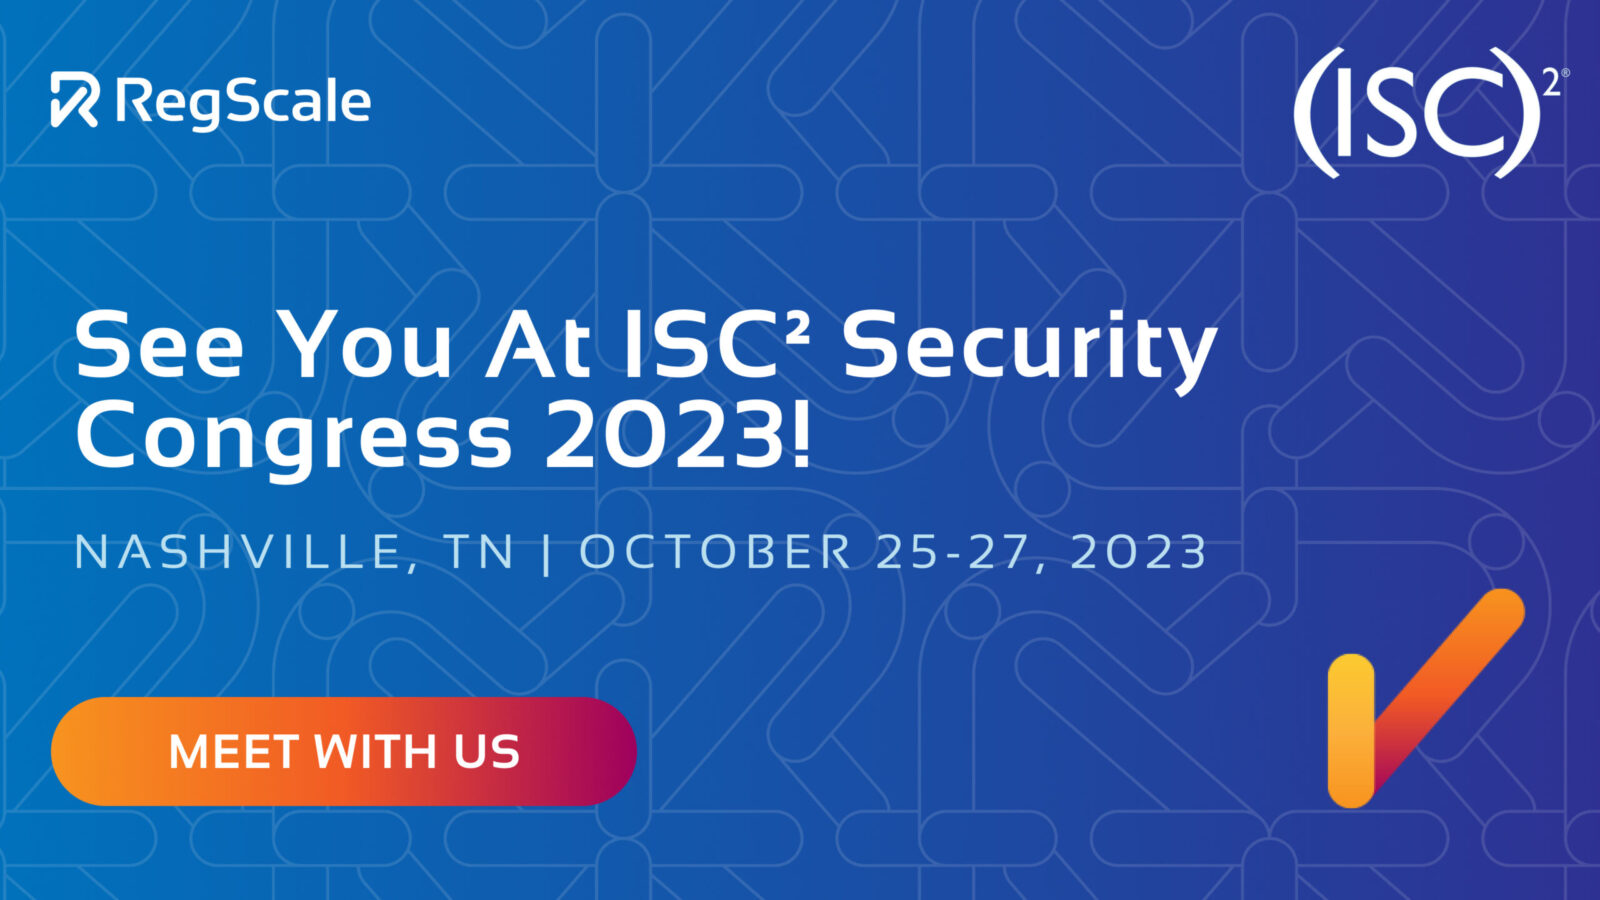 ISC2 Security Congress 2023 - RegScale